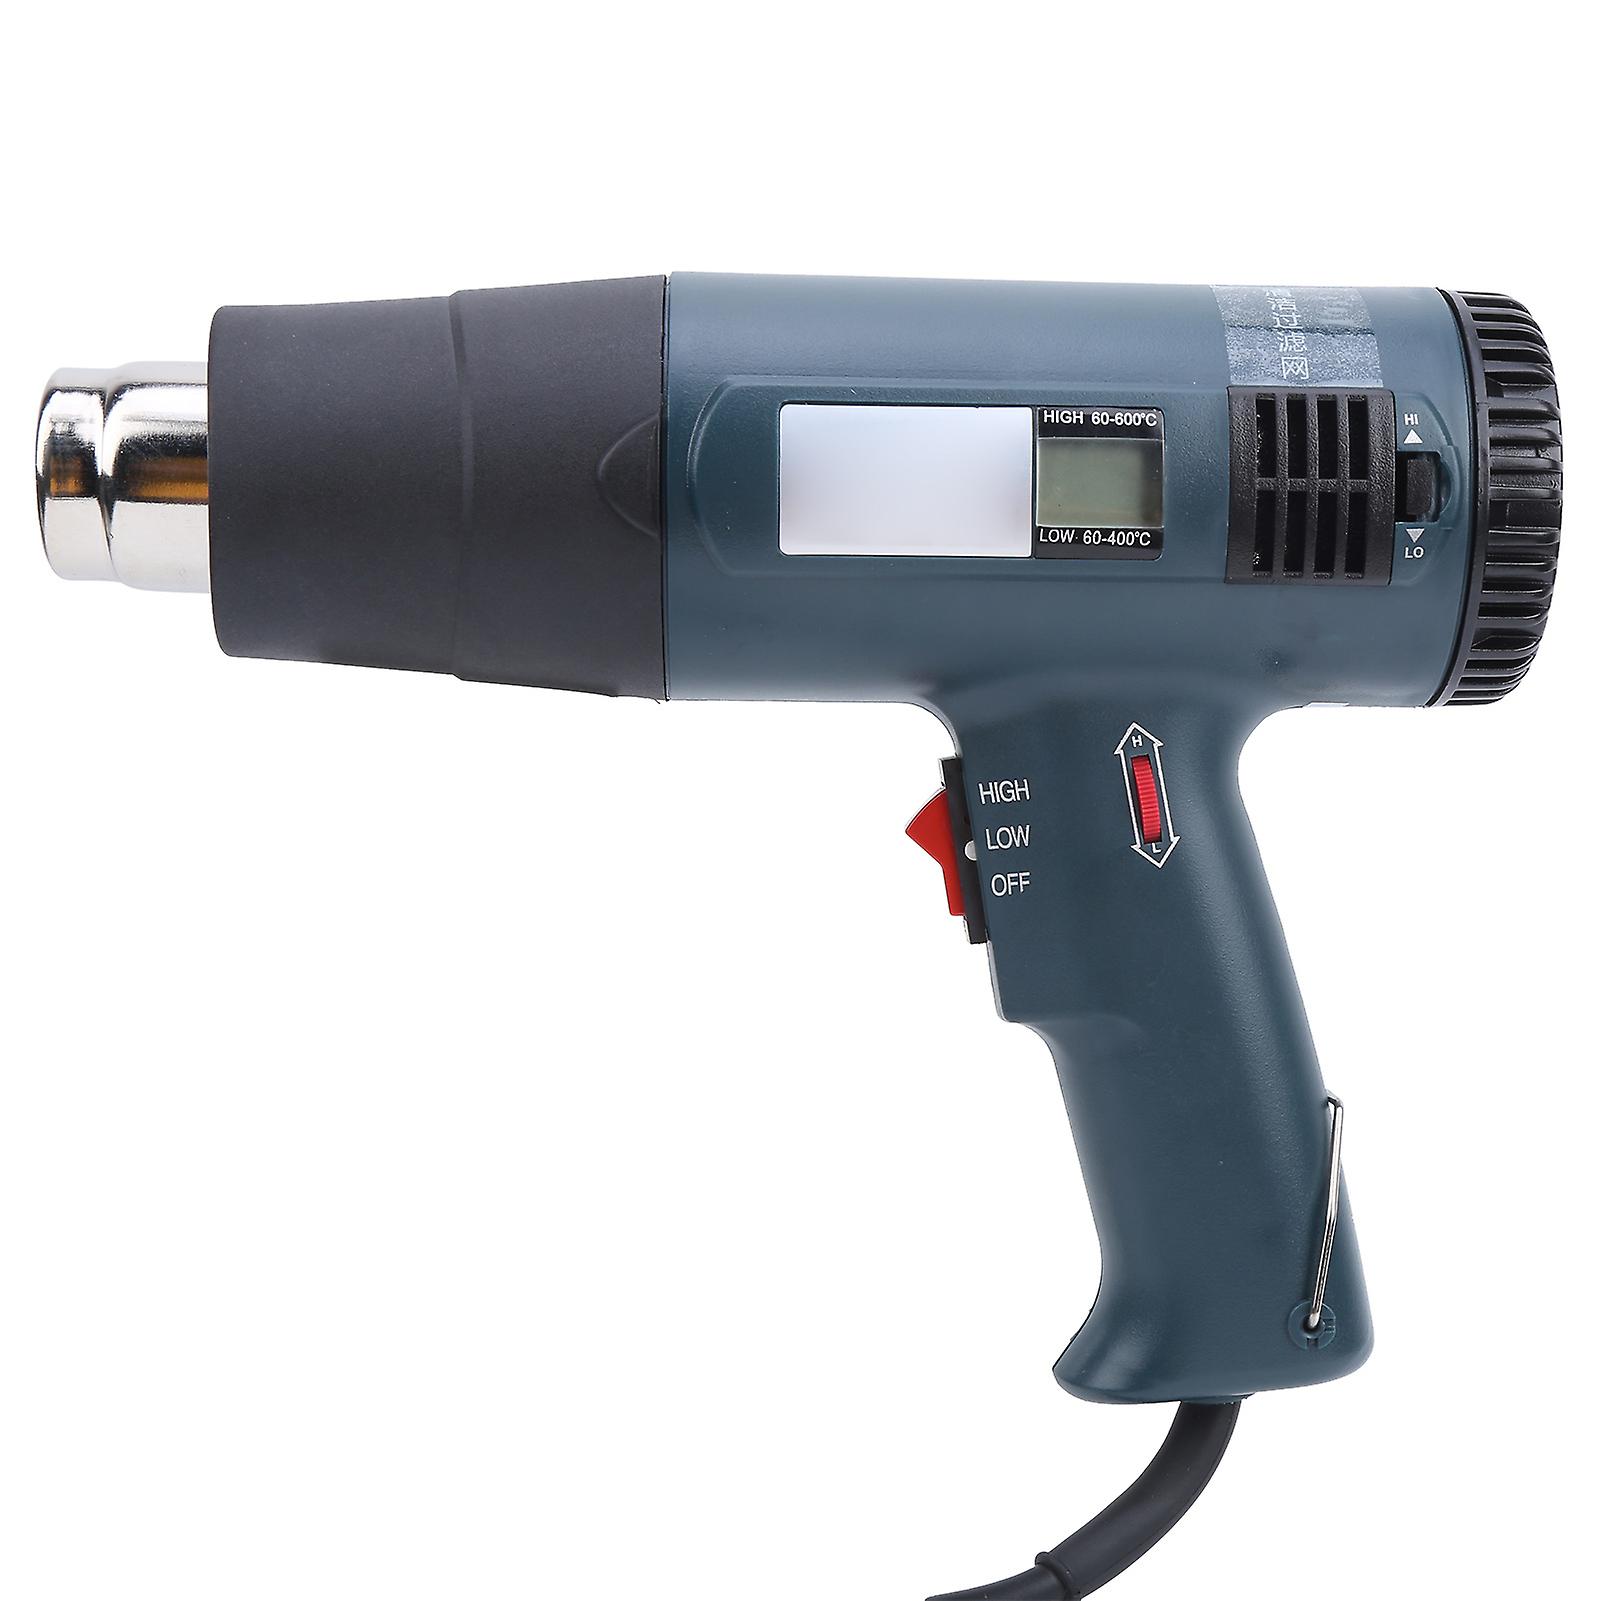 Electronic Hot Air Gun Adjustable Plastic Temperature Industrial Tool Gj-9a20lcd 2000w 220veu Plug